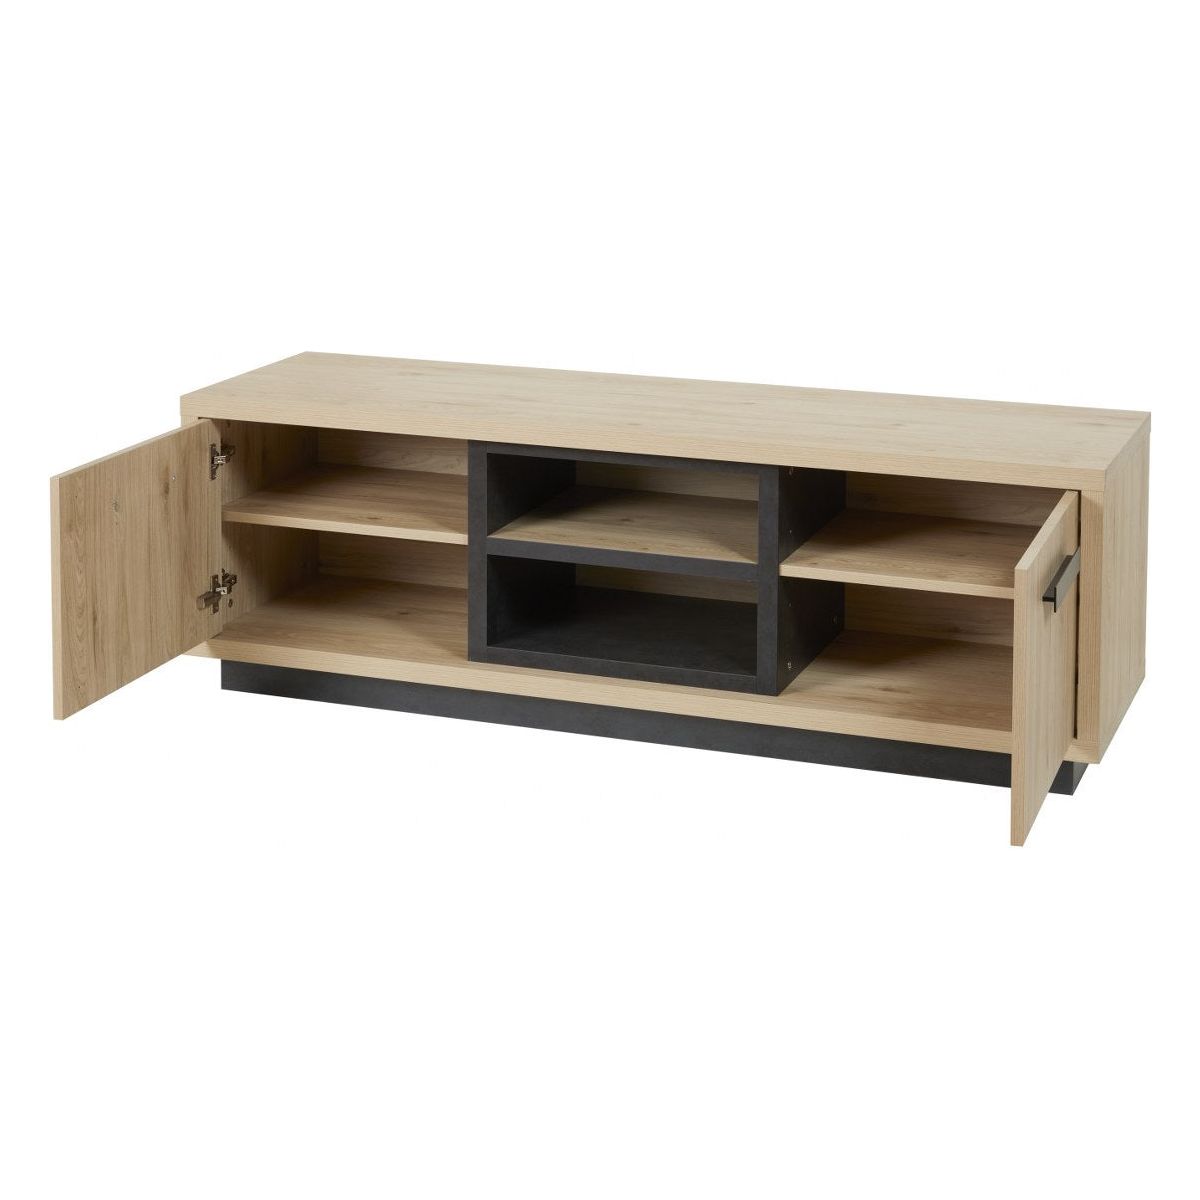 TV cabinet | Furniture series Tilly | brown, natural, black | 168